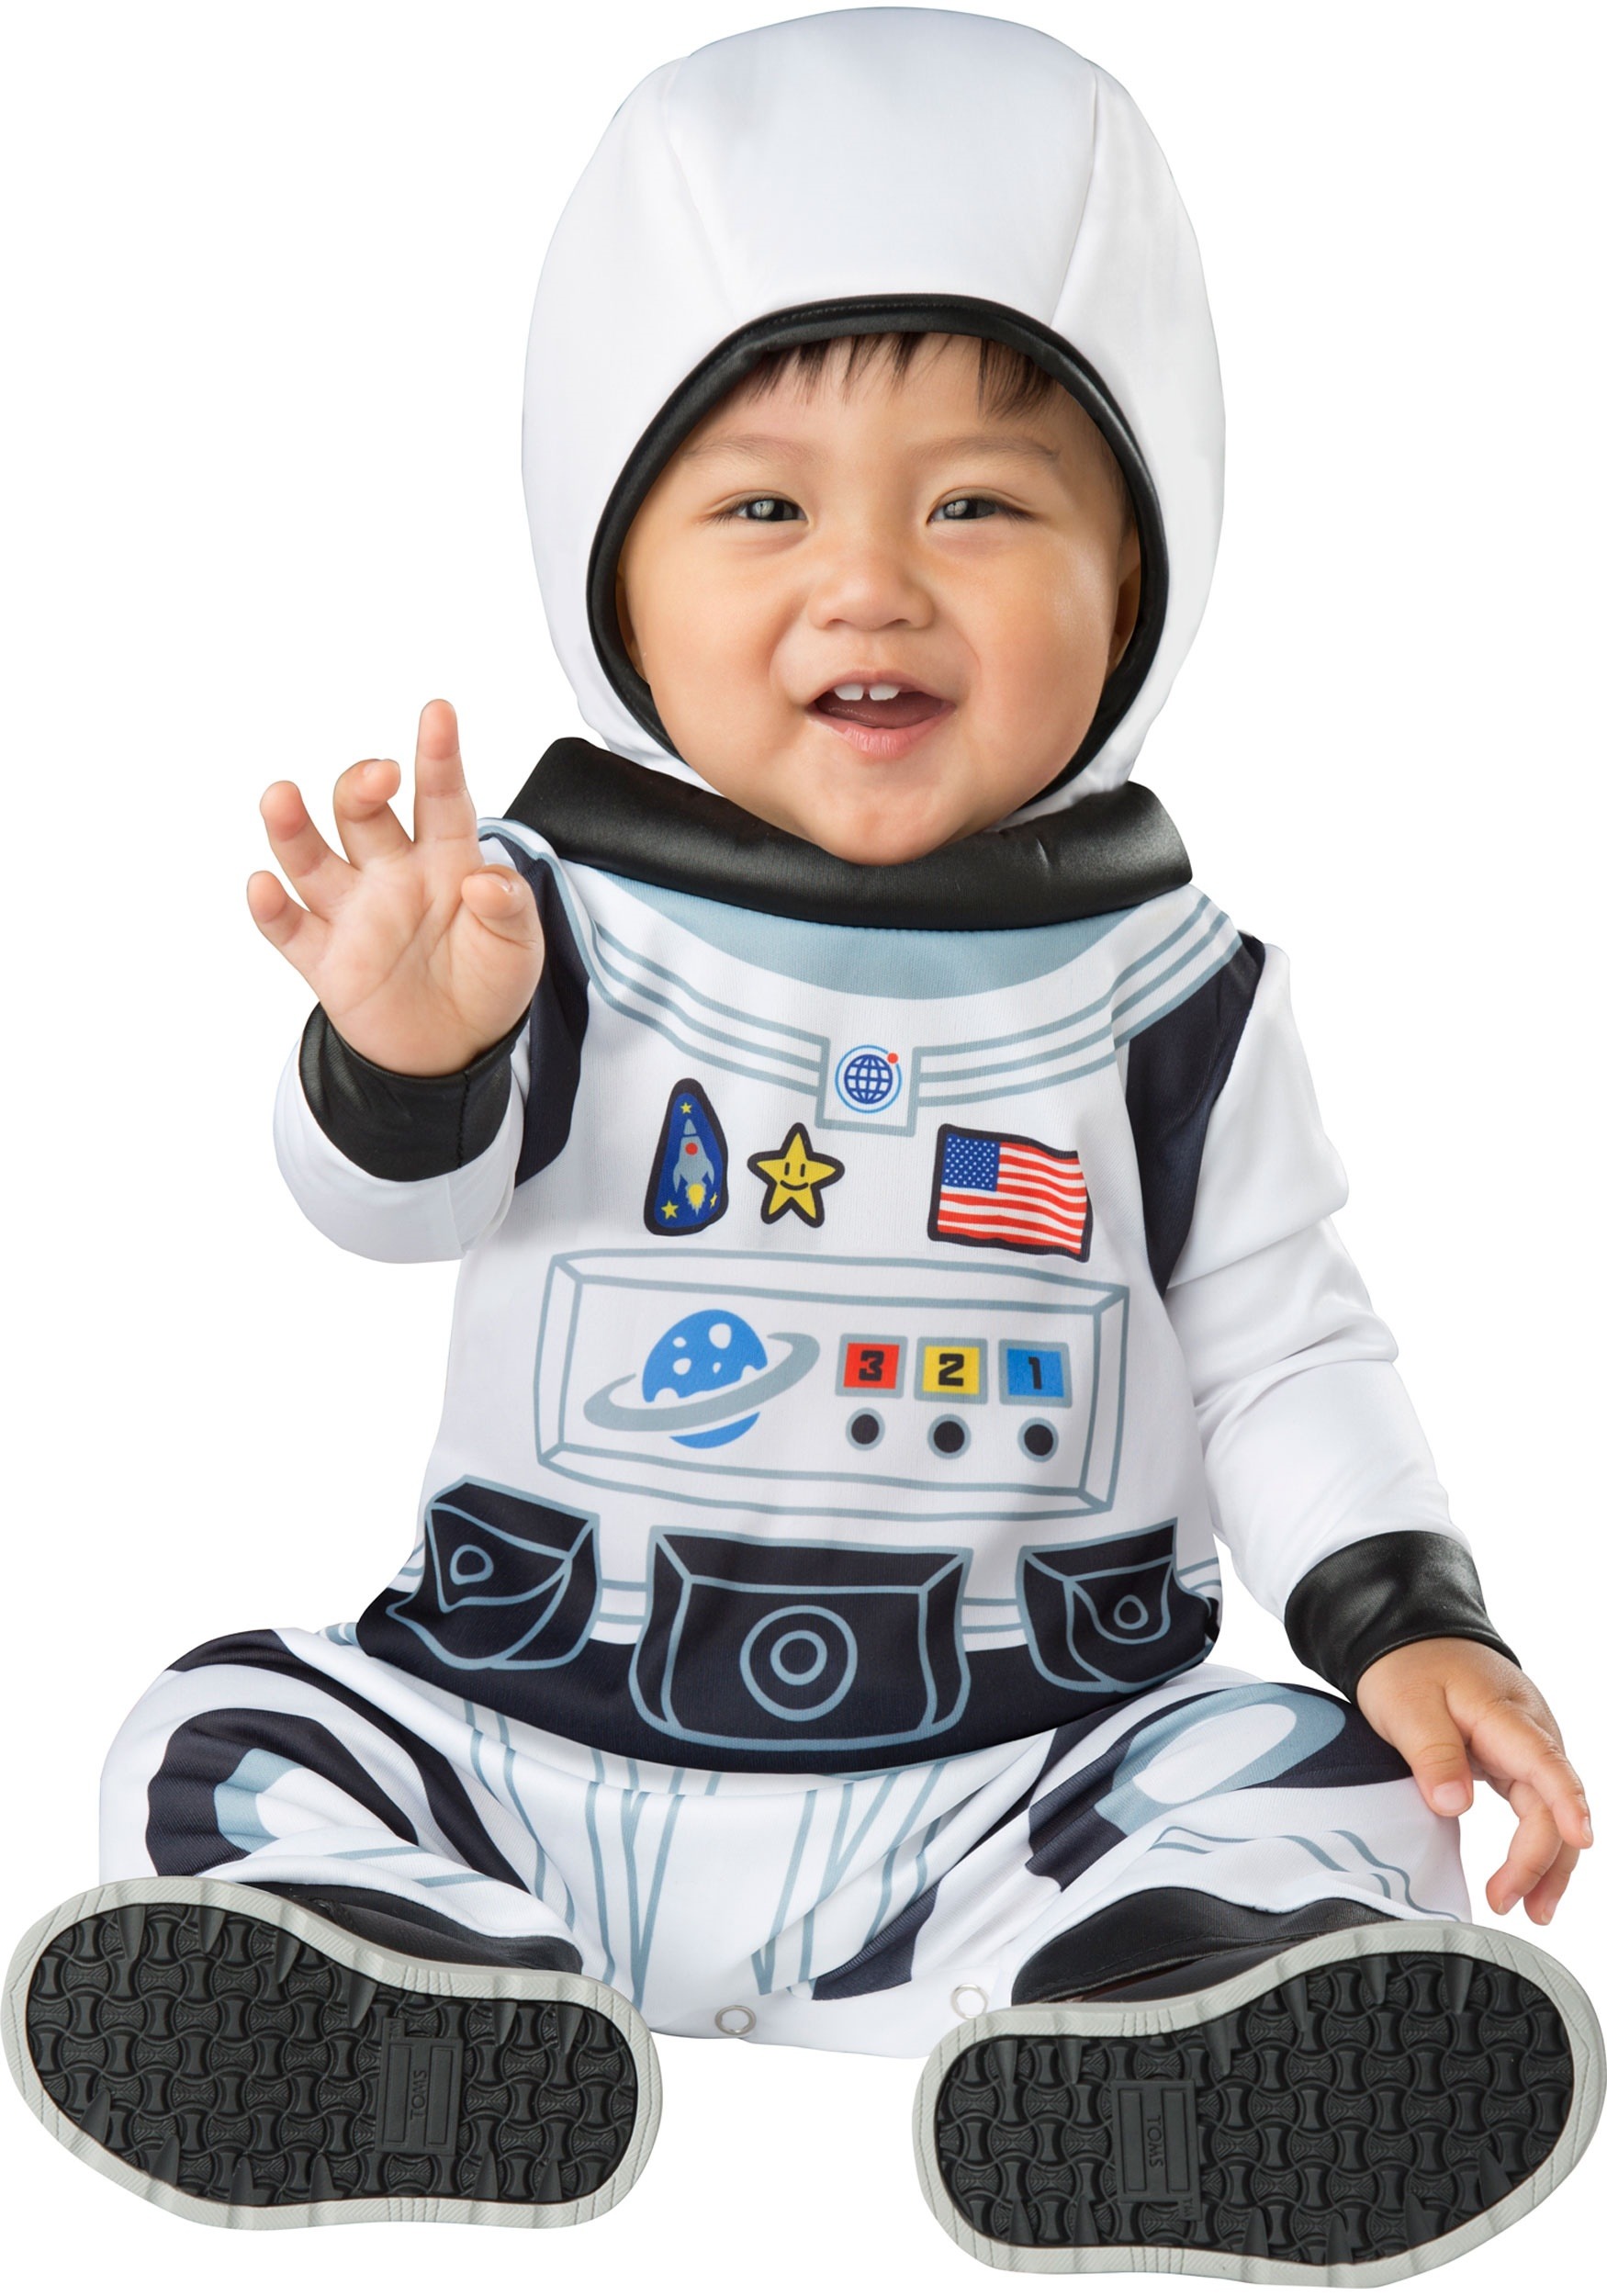 Astronaut Tot Costume For Infants , Baby Astronaut Costumes